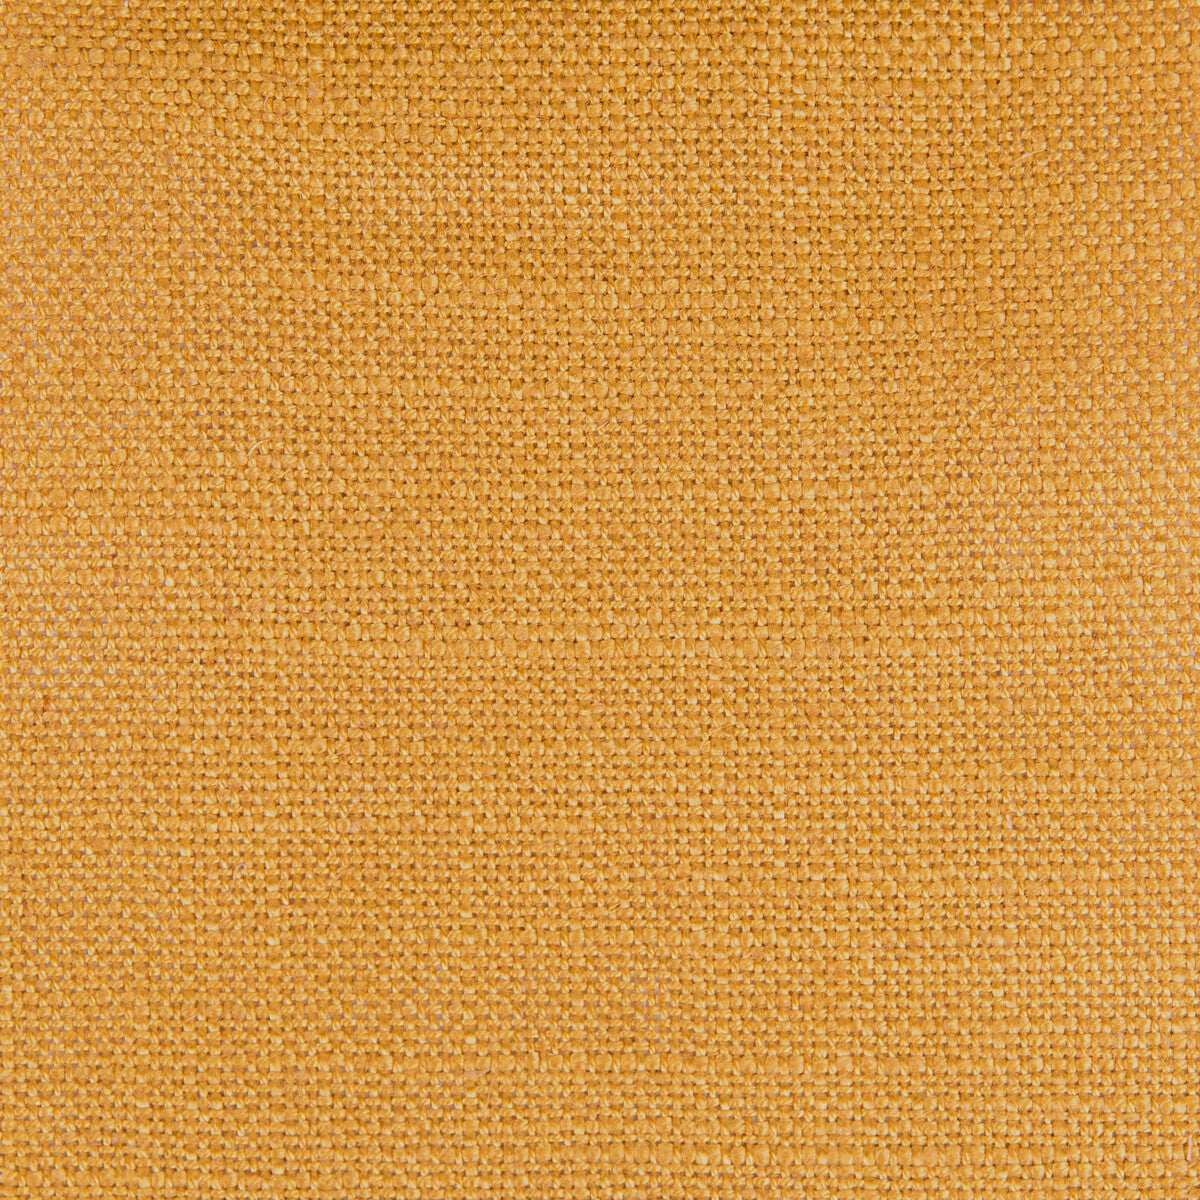 Peru fabric in albero color - pattern GDT5548.007.0 - by Gaston y Daniela in the Gaston Nuevo Mundo collection